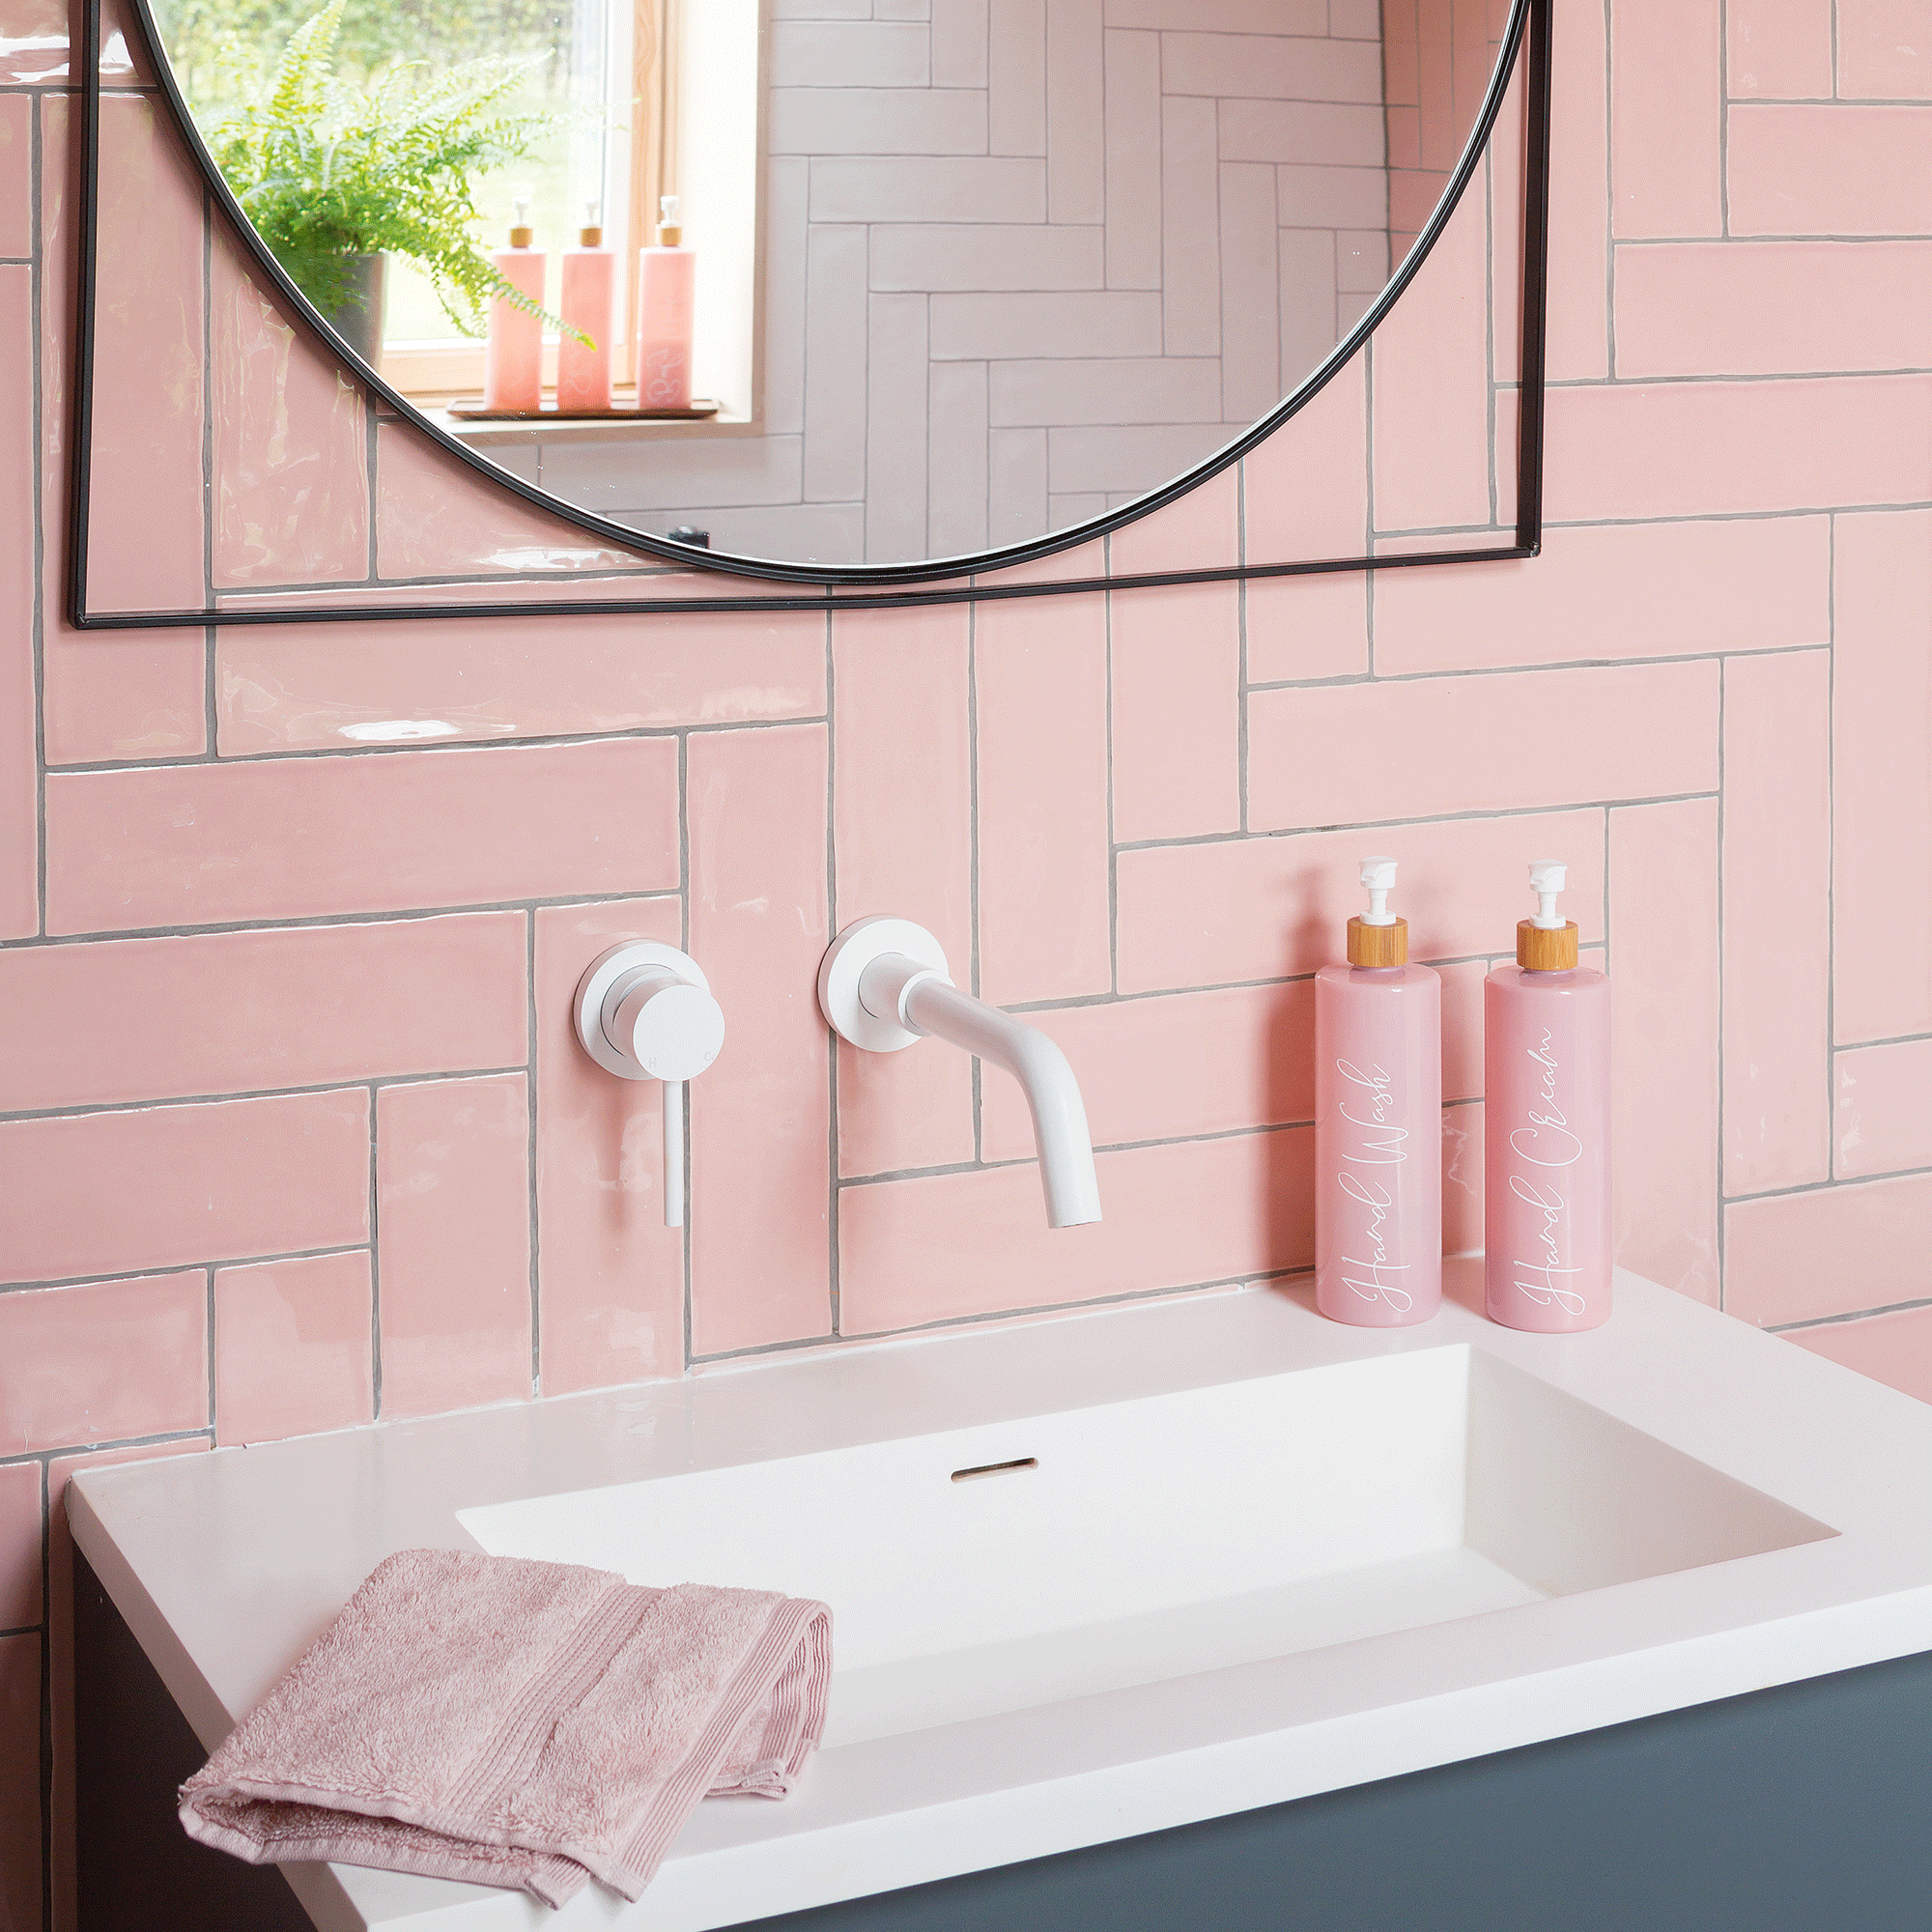 Pink bathroom tiles with sink